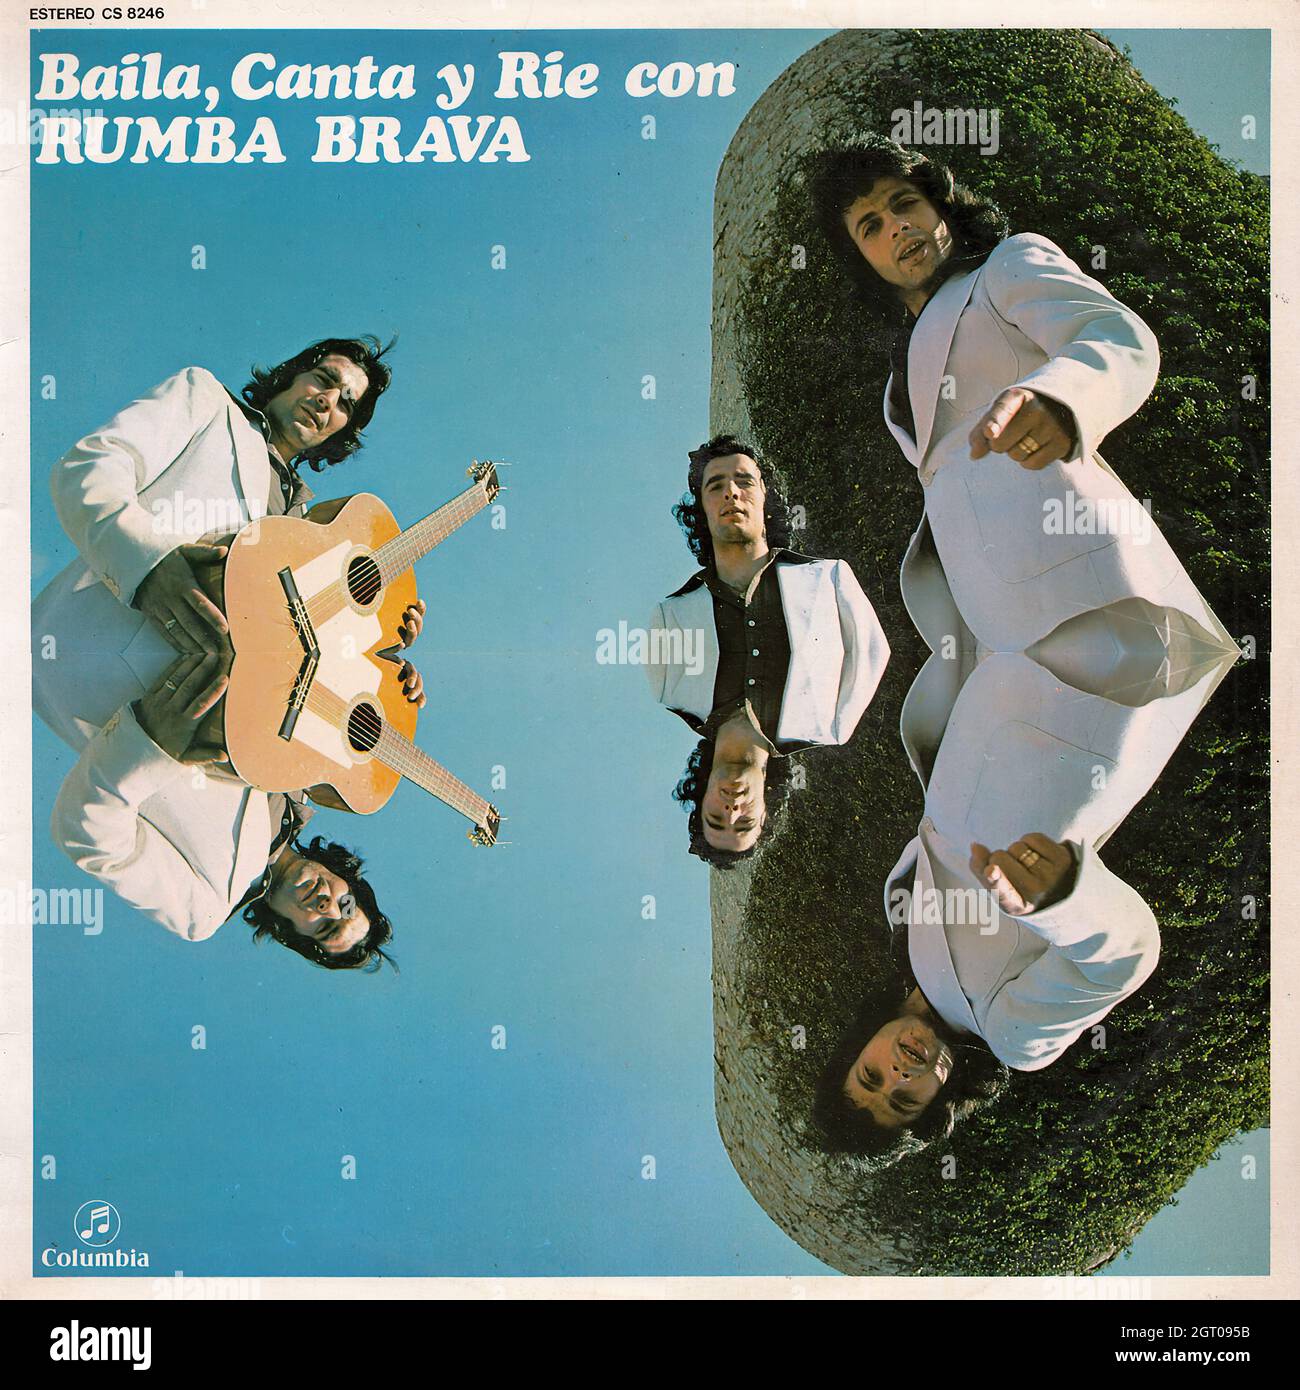 Rumba Brava - Baila, canta y rie con Rumba Brava - Vintage Vinyl Record Cover Stock Photo